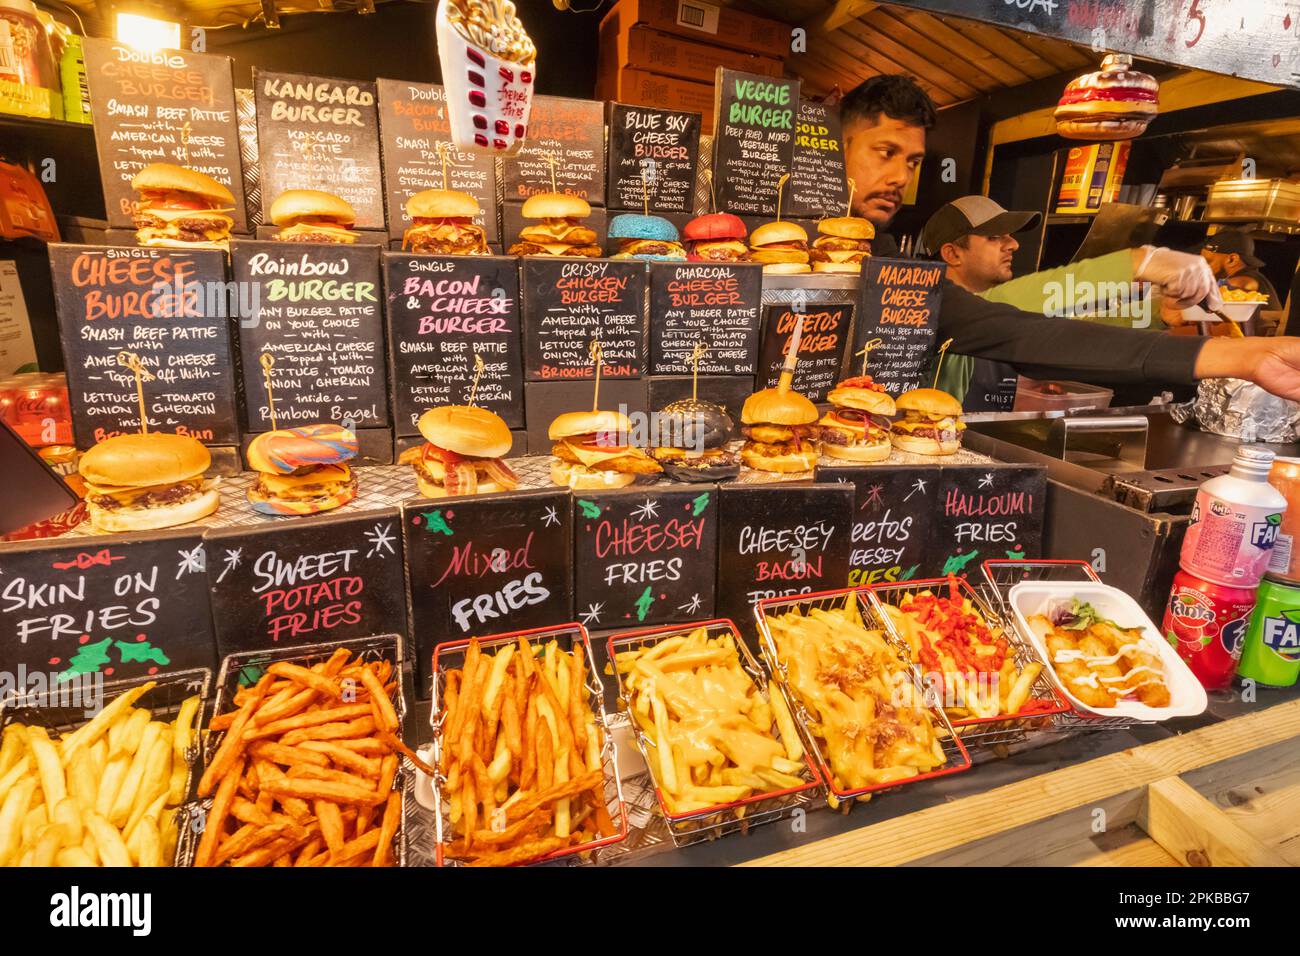 England, London, Southwark, Riverside Christmas Market, Food Stall Display of Burgers and Fries Stock Photo